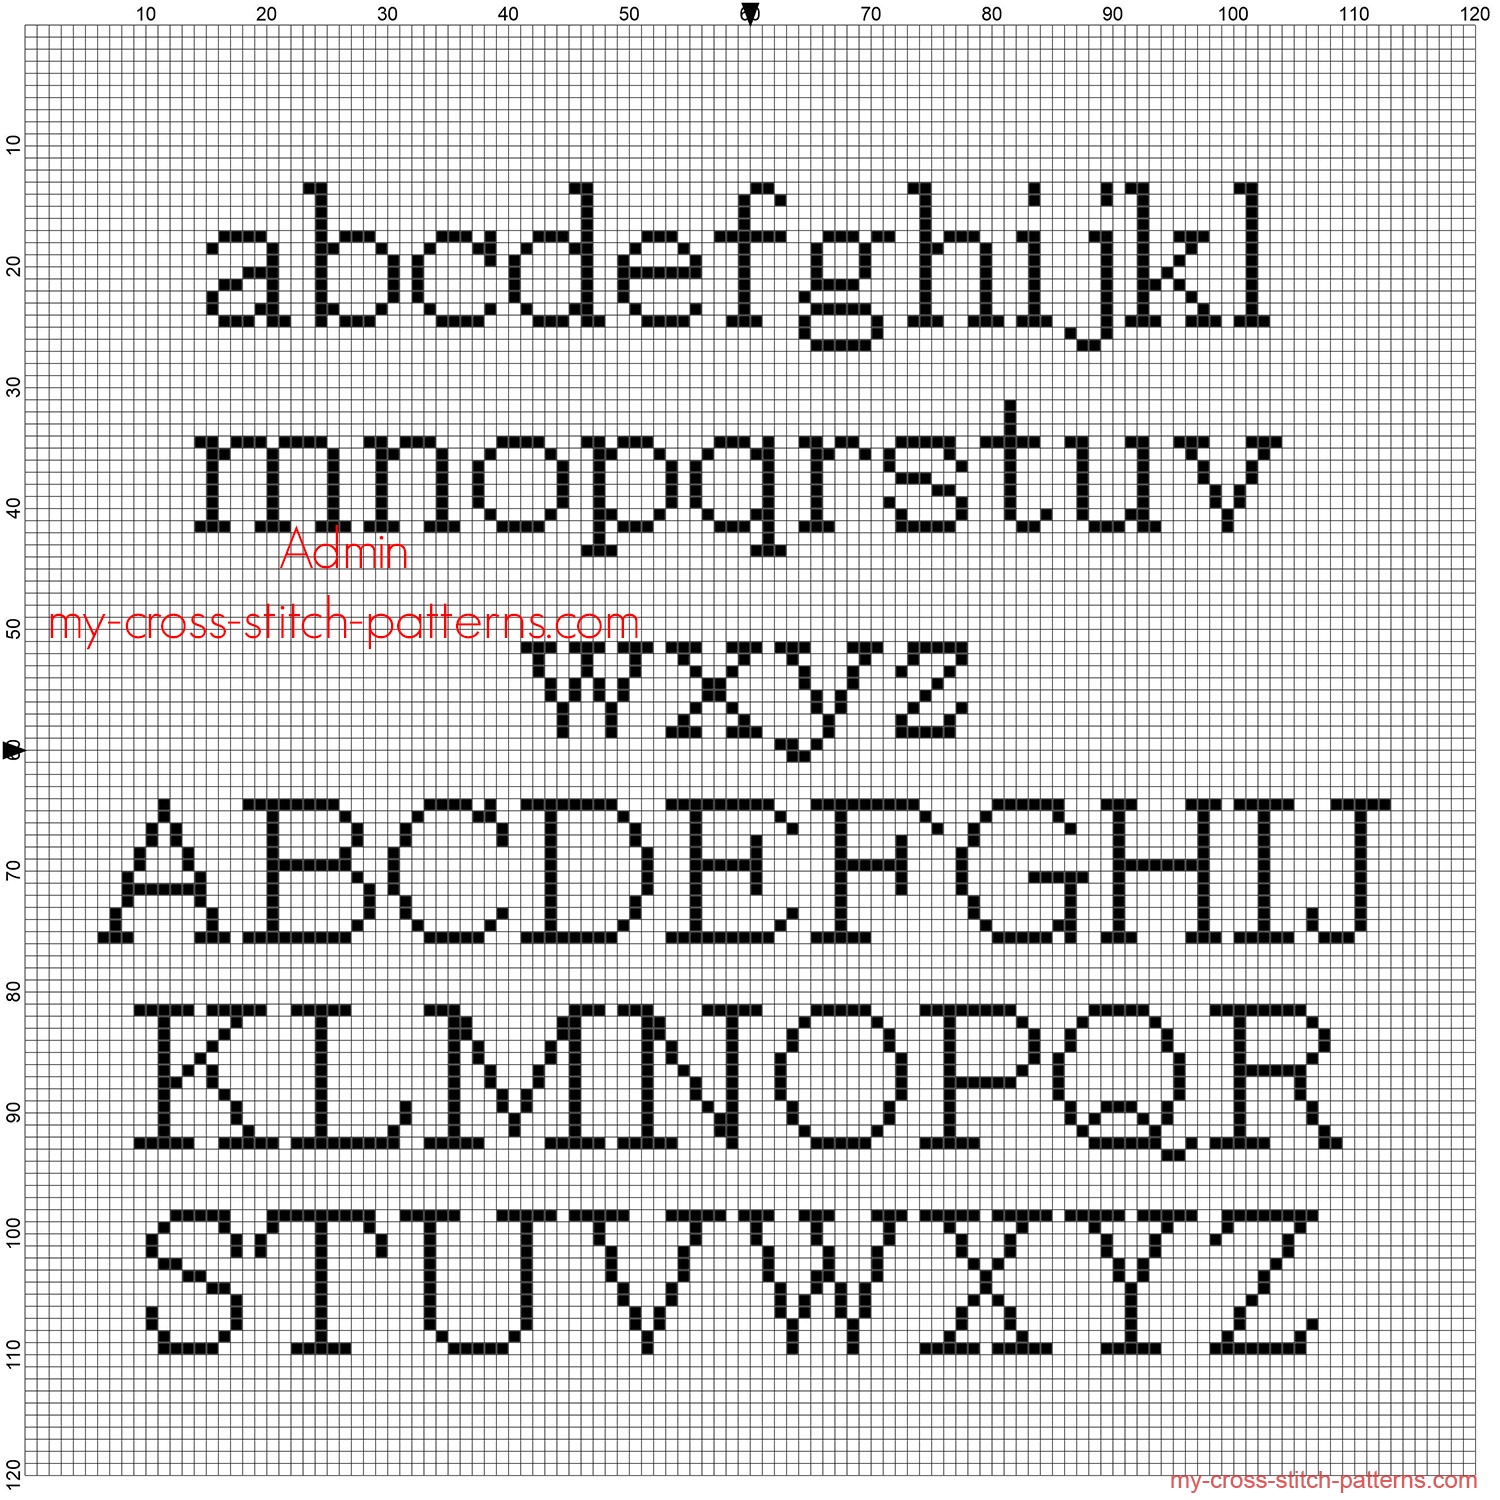 cross-stitch-alphabet-batang-all-letters-free-pattern-download-free-cross-stitch-patterns